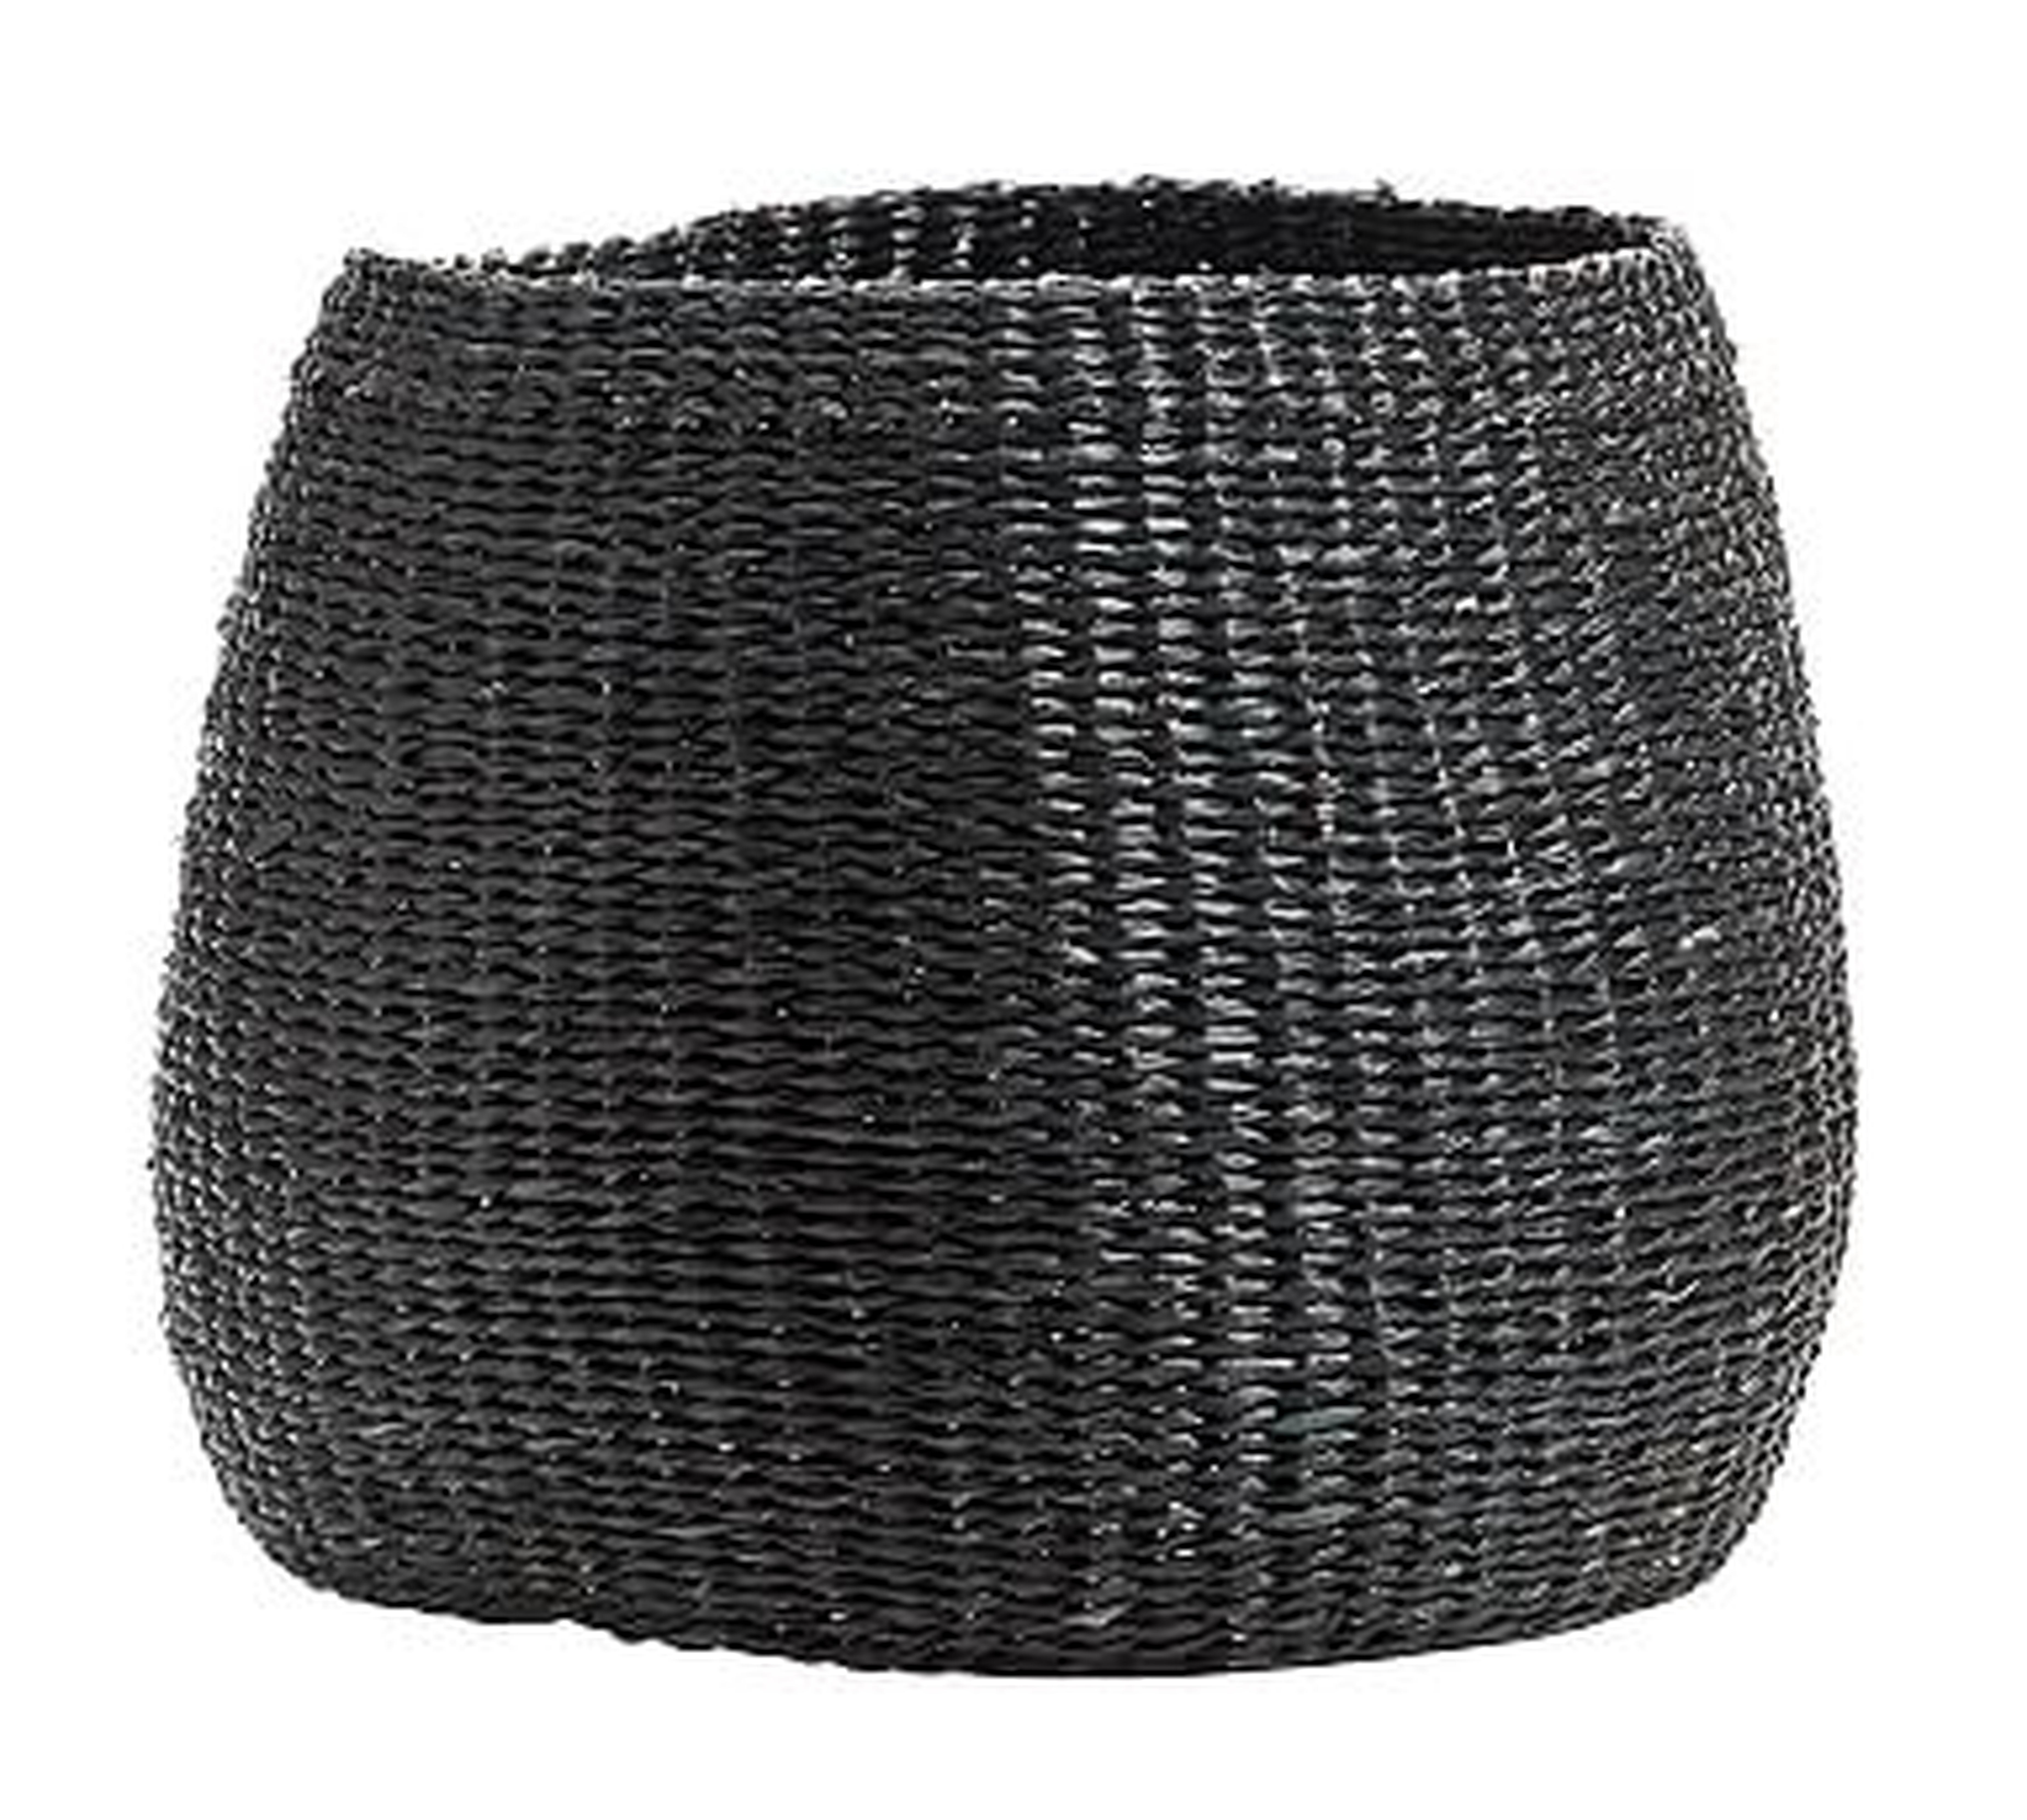 Lima Woven Basket, Black, Medium - Pottery Barn